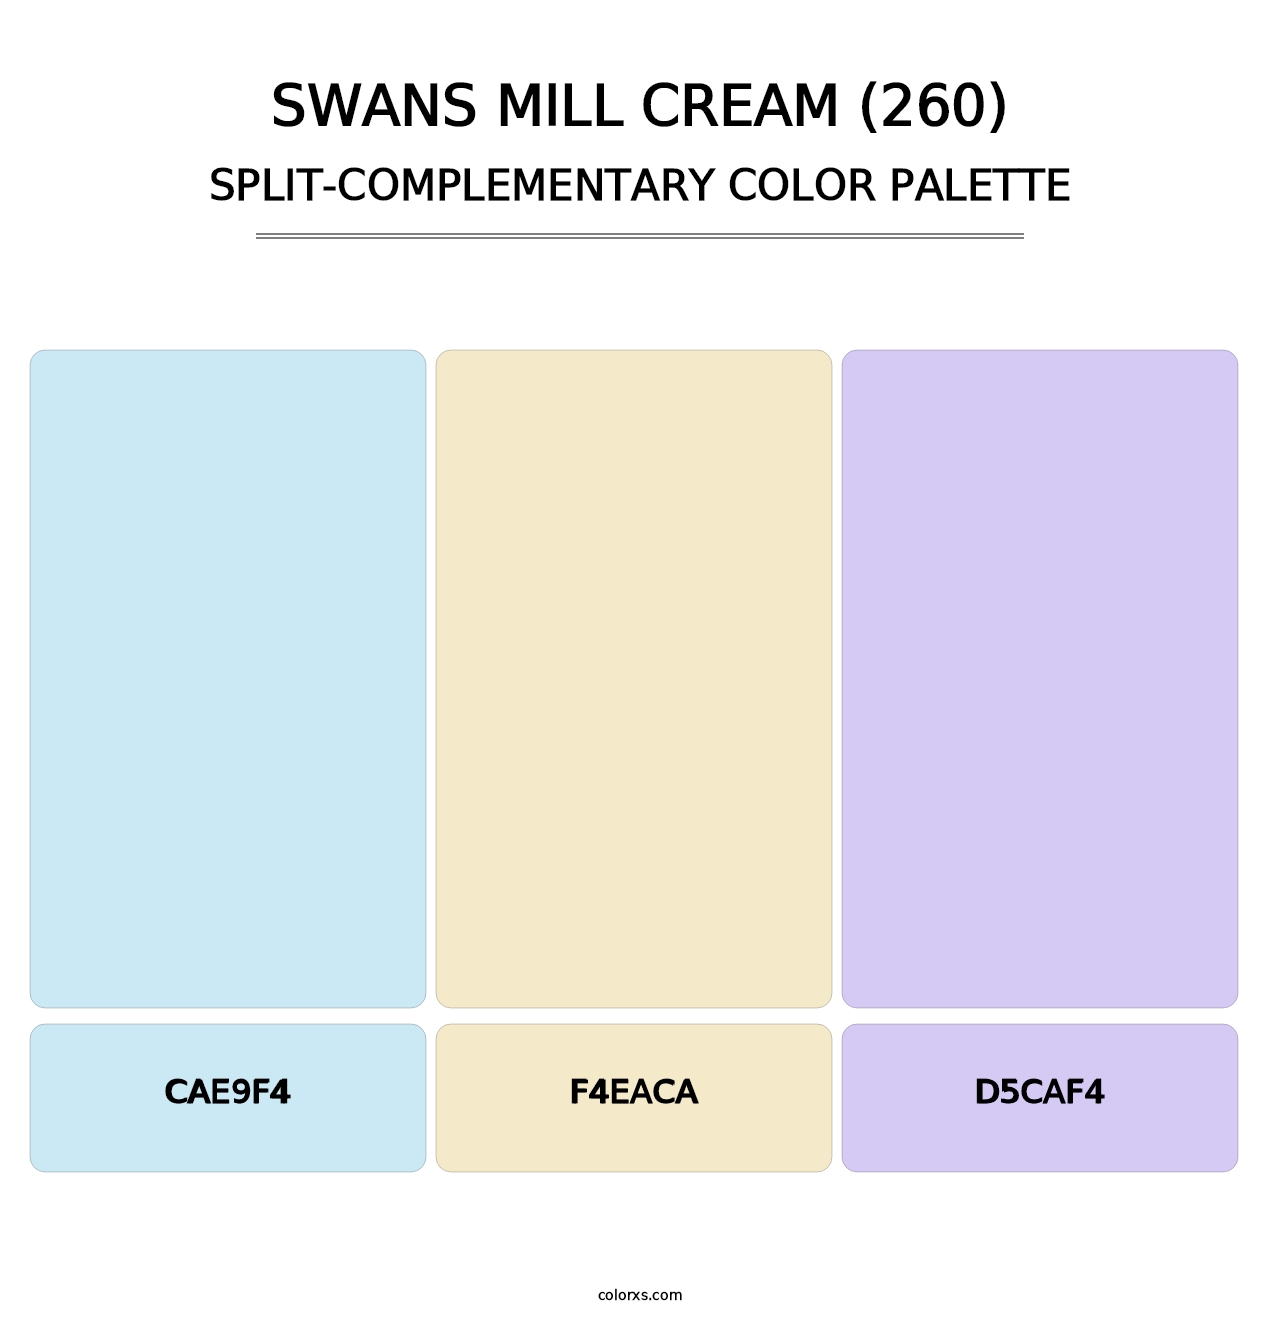 Swans Mill Cream (260) - Split-Complementary Color Palette